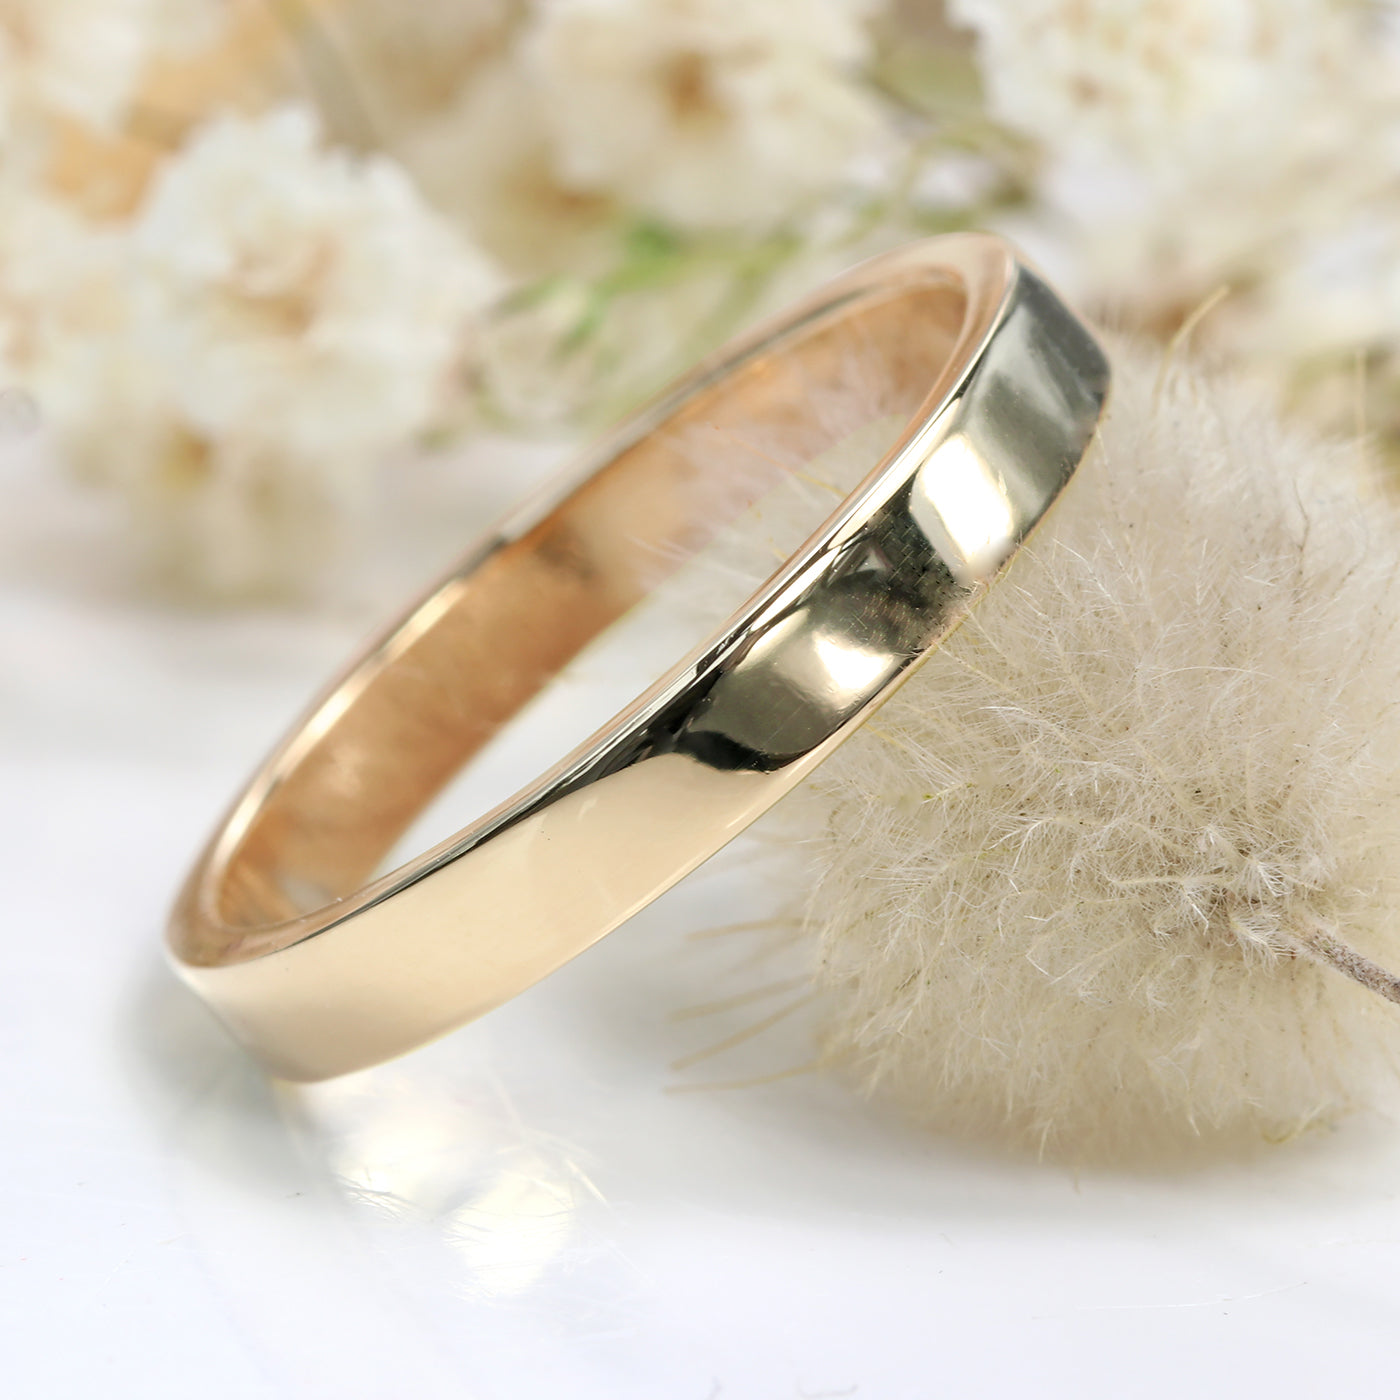 18ct Rose Gold 3mm Flat Polished Wedding Ring